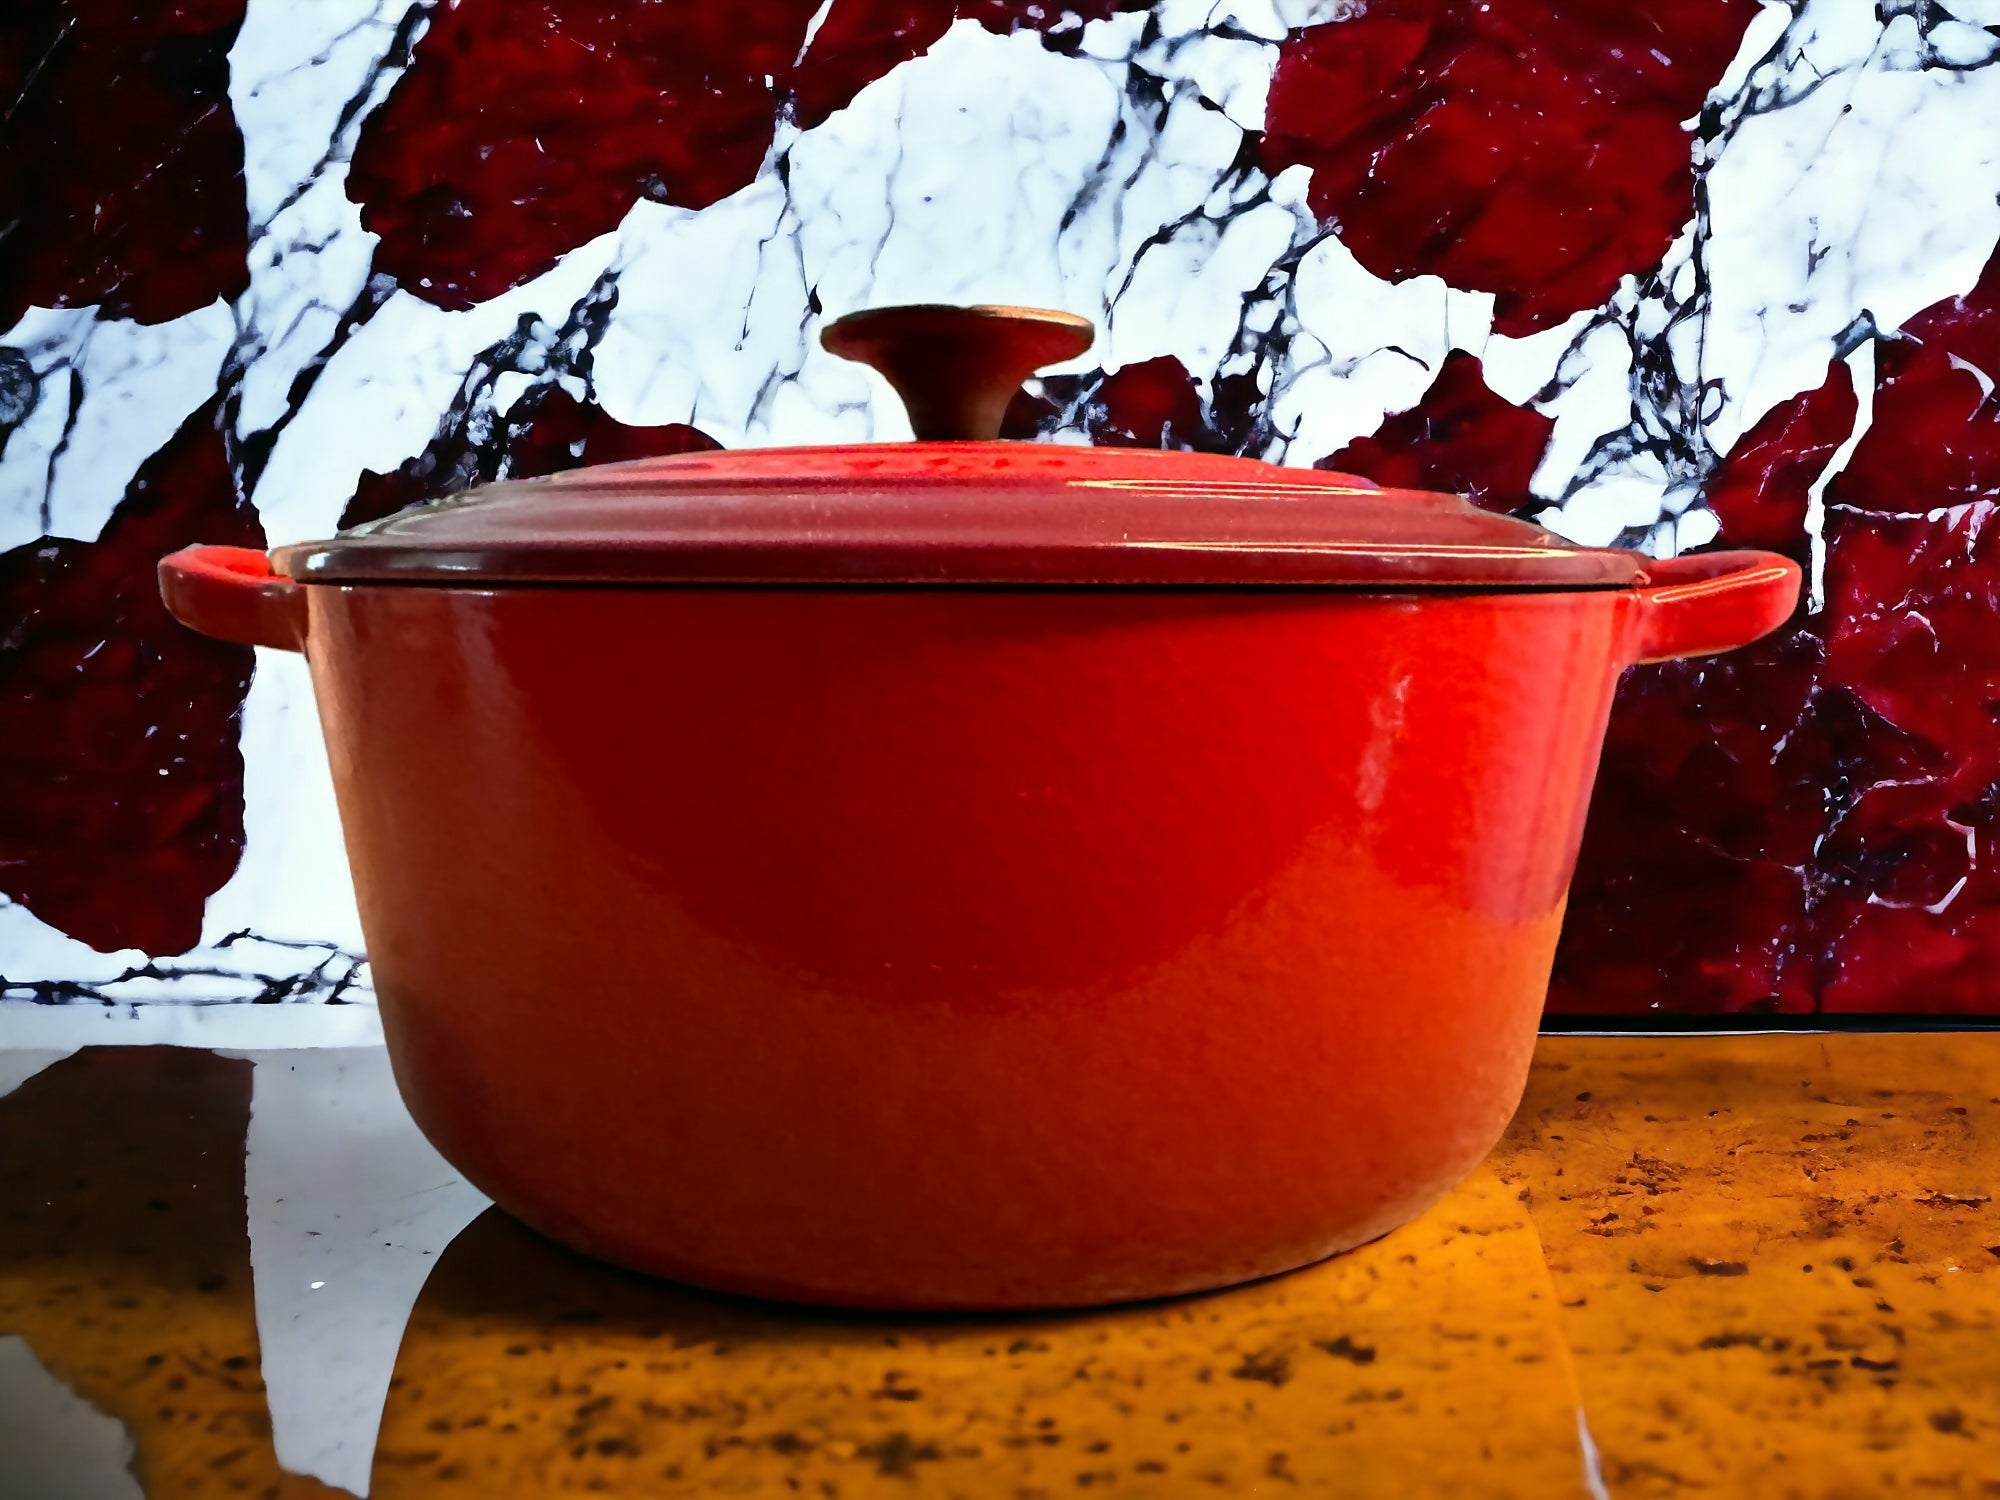 Le Creuset 4.5 Quart Cerise Dutch Oven - Iconic Red Enameled Cast Iron Cookware